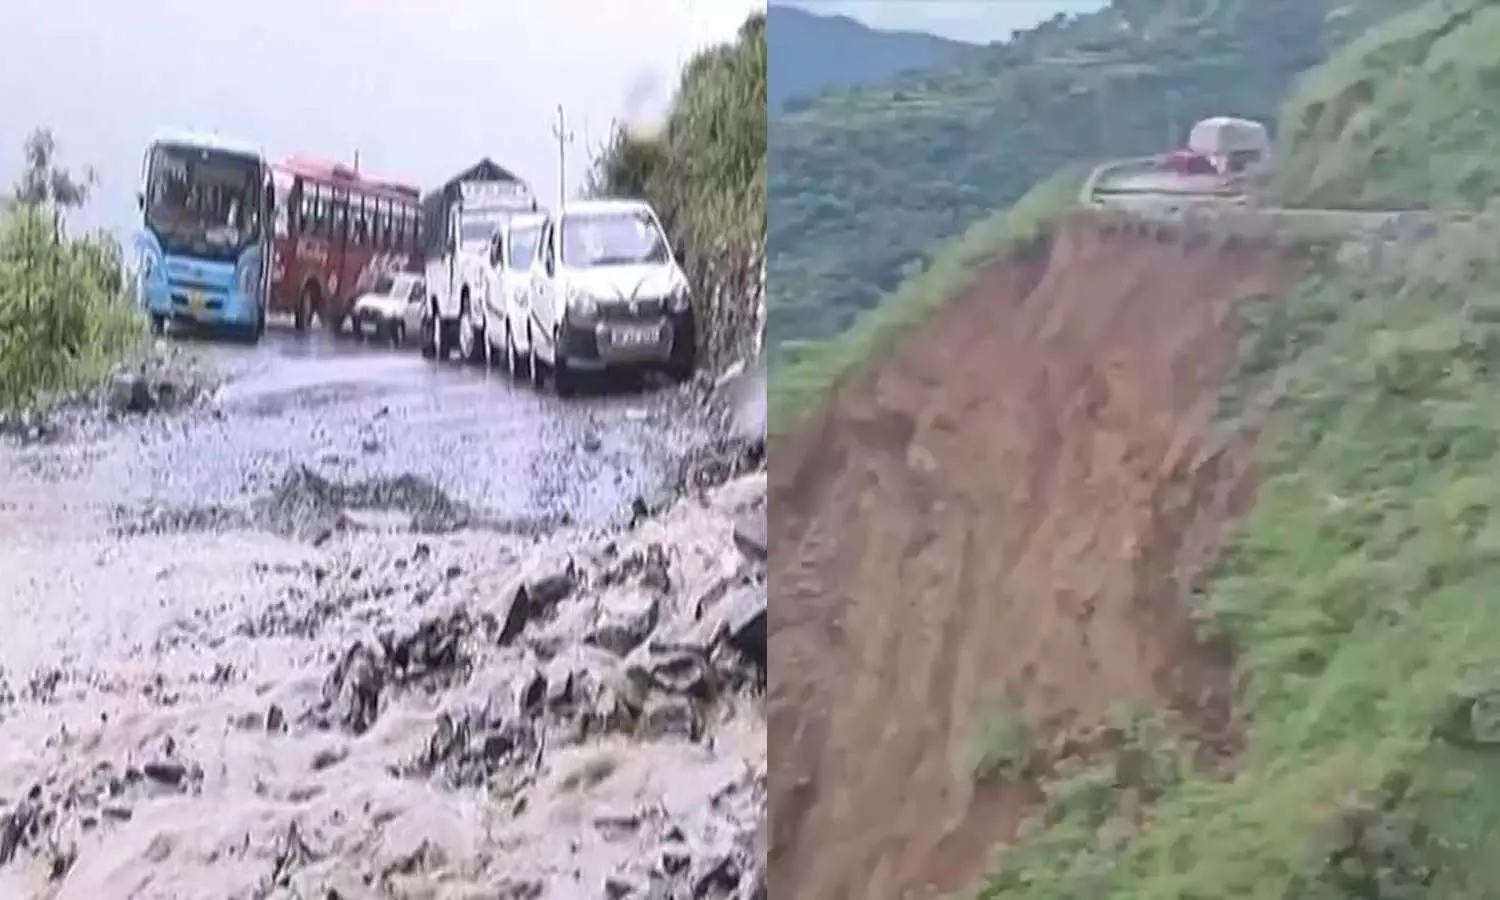 Landslide havoc in Himachal, people are afraid to walk on the roads